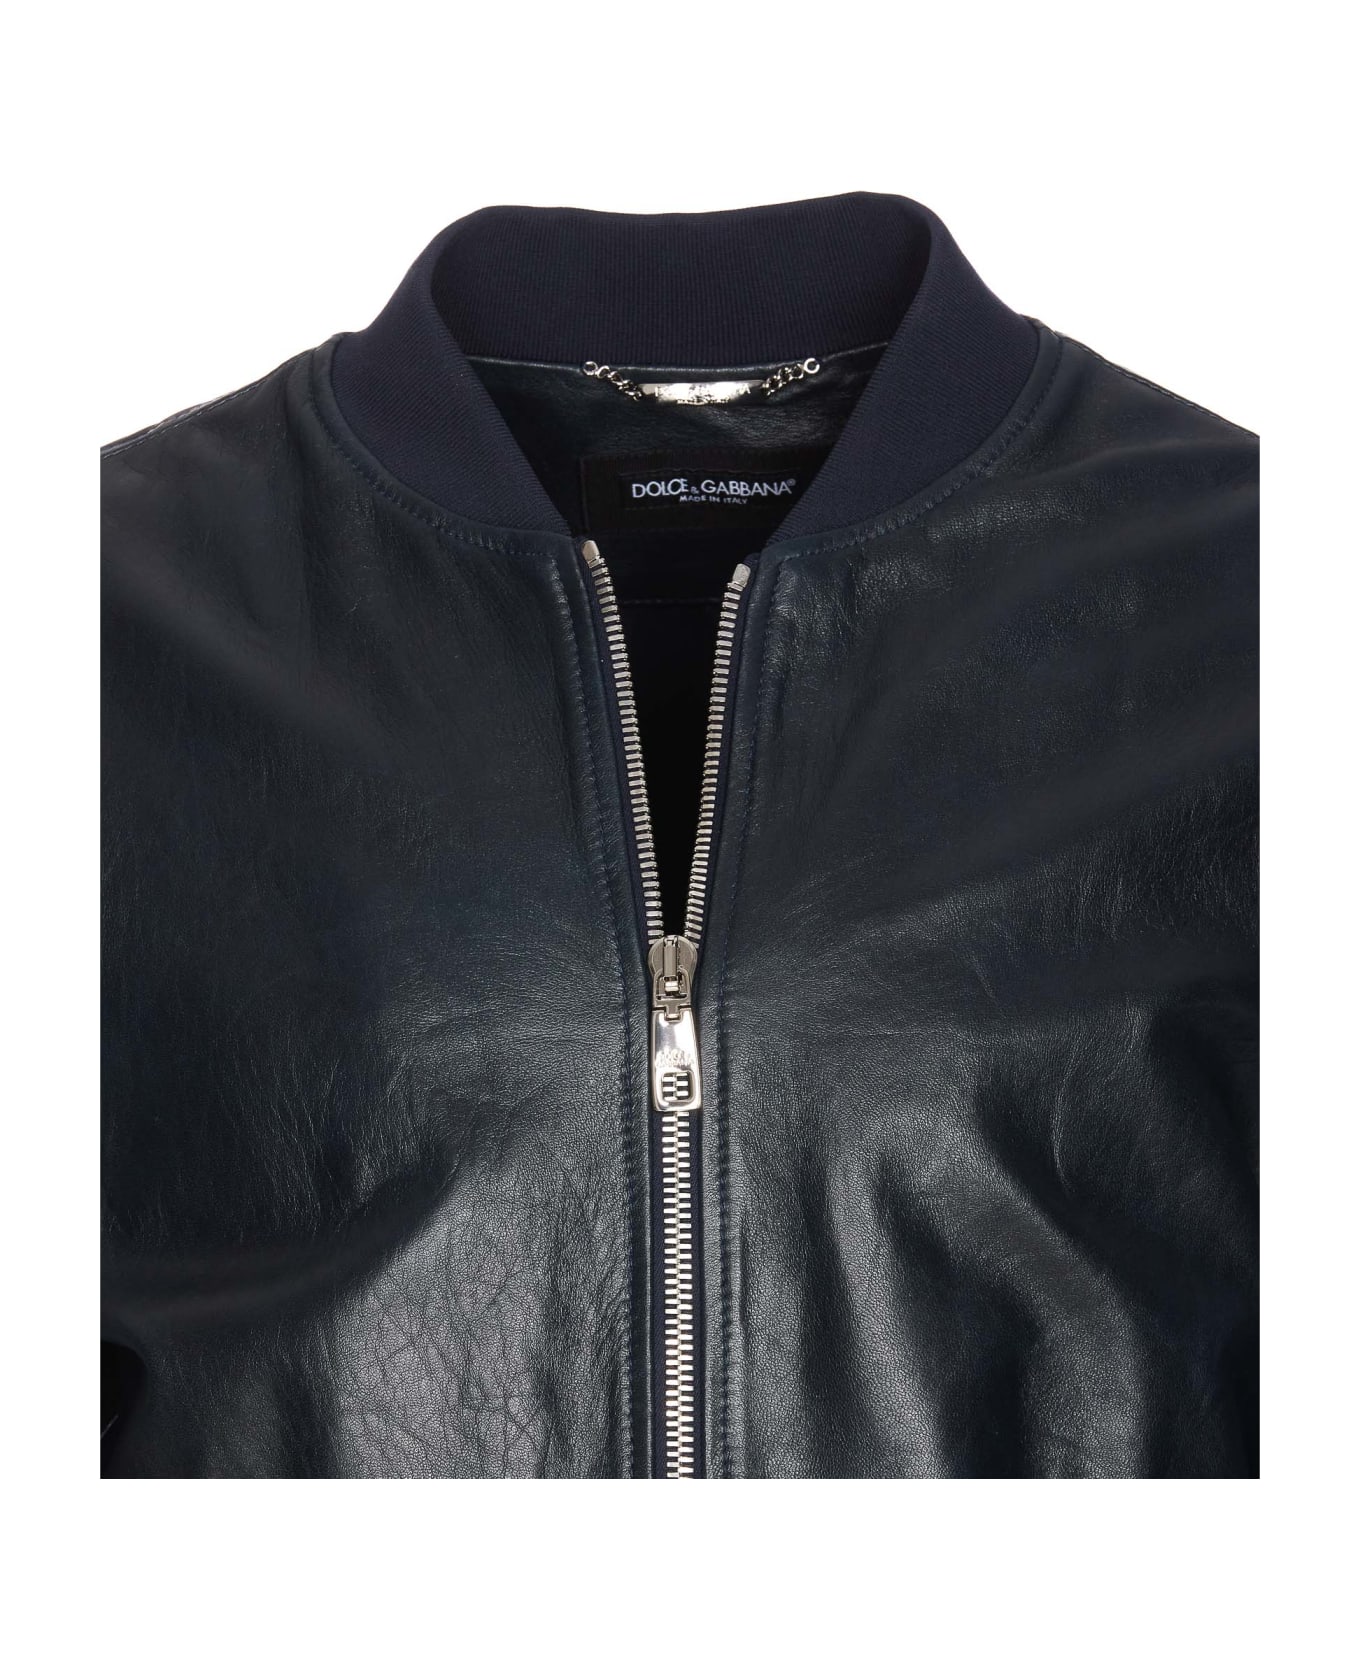 Dolce faille & Gabbana Navy Lambskin Jacket - BLUE